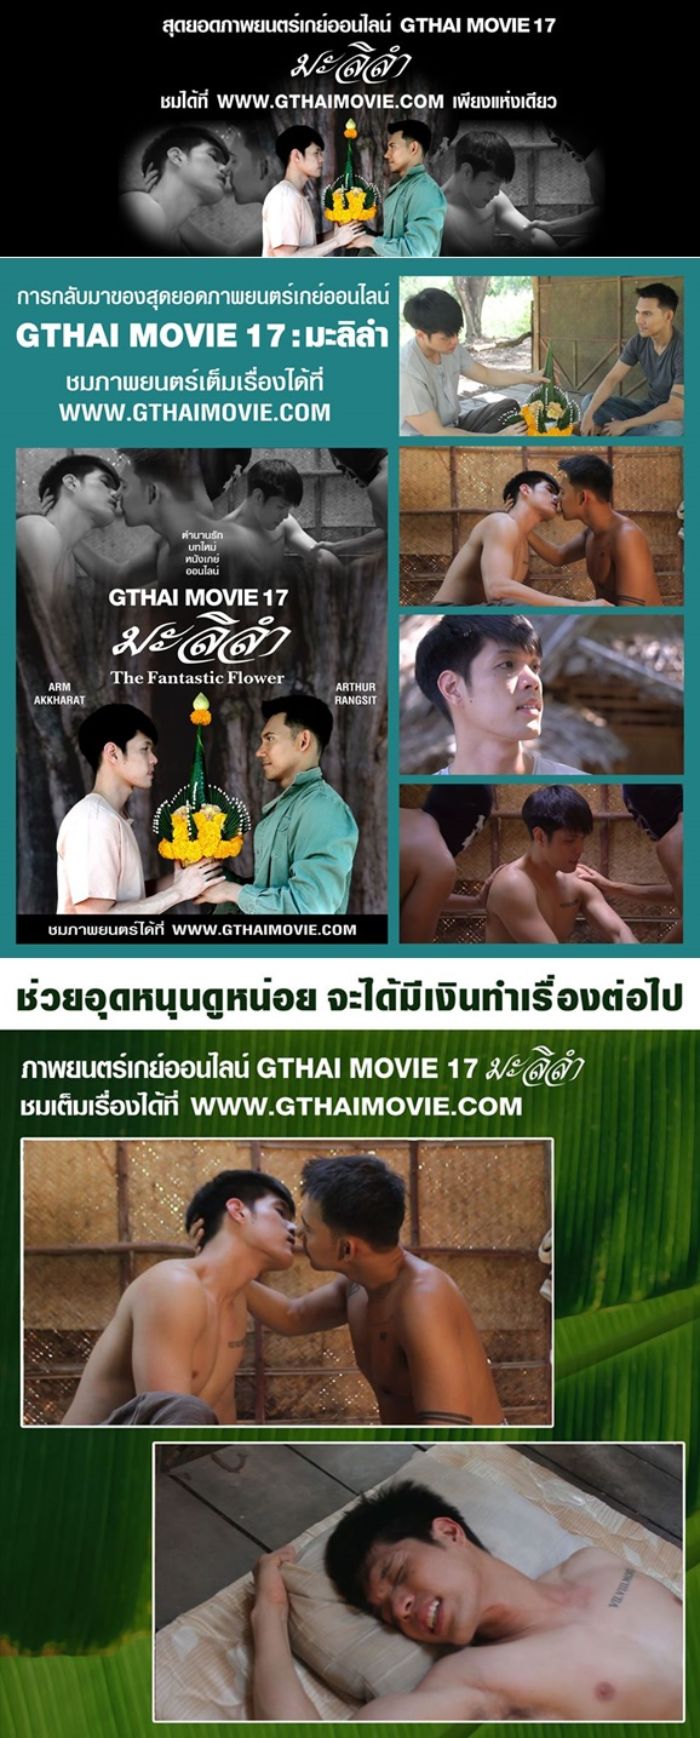 Gthai Movie 17 - The Fantastic Flower